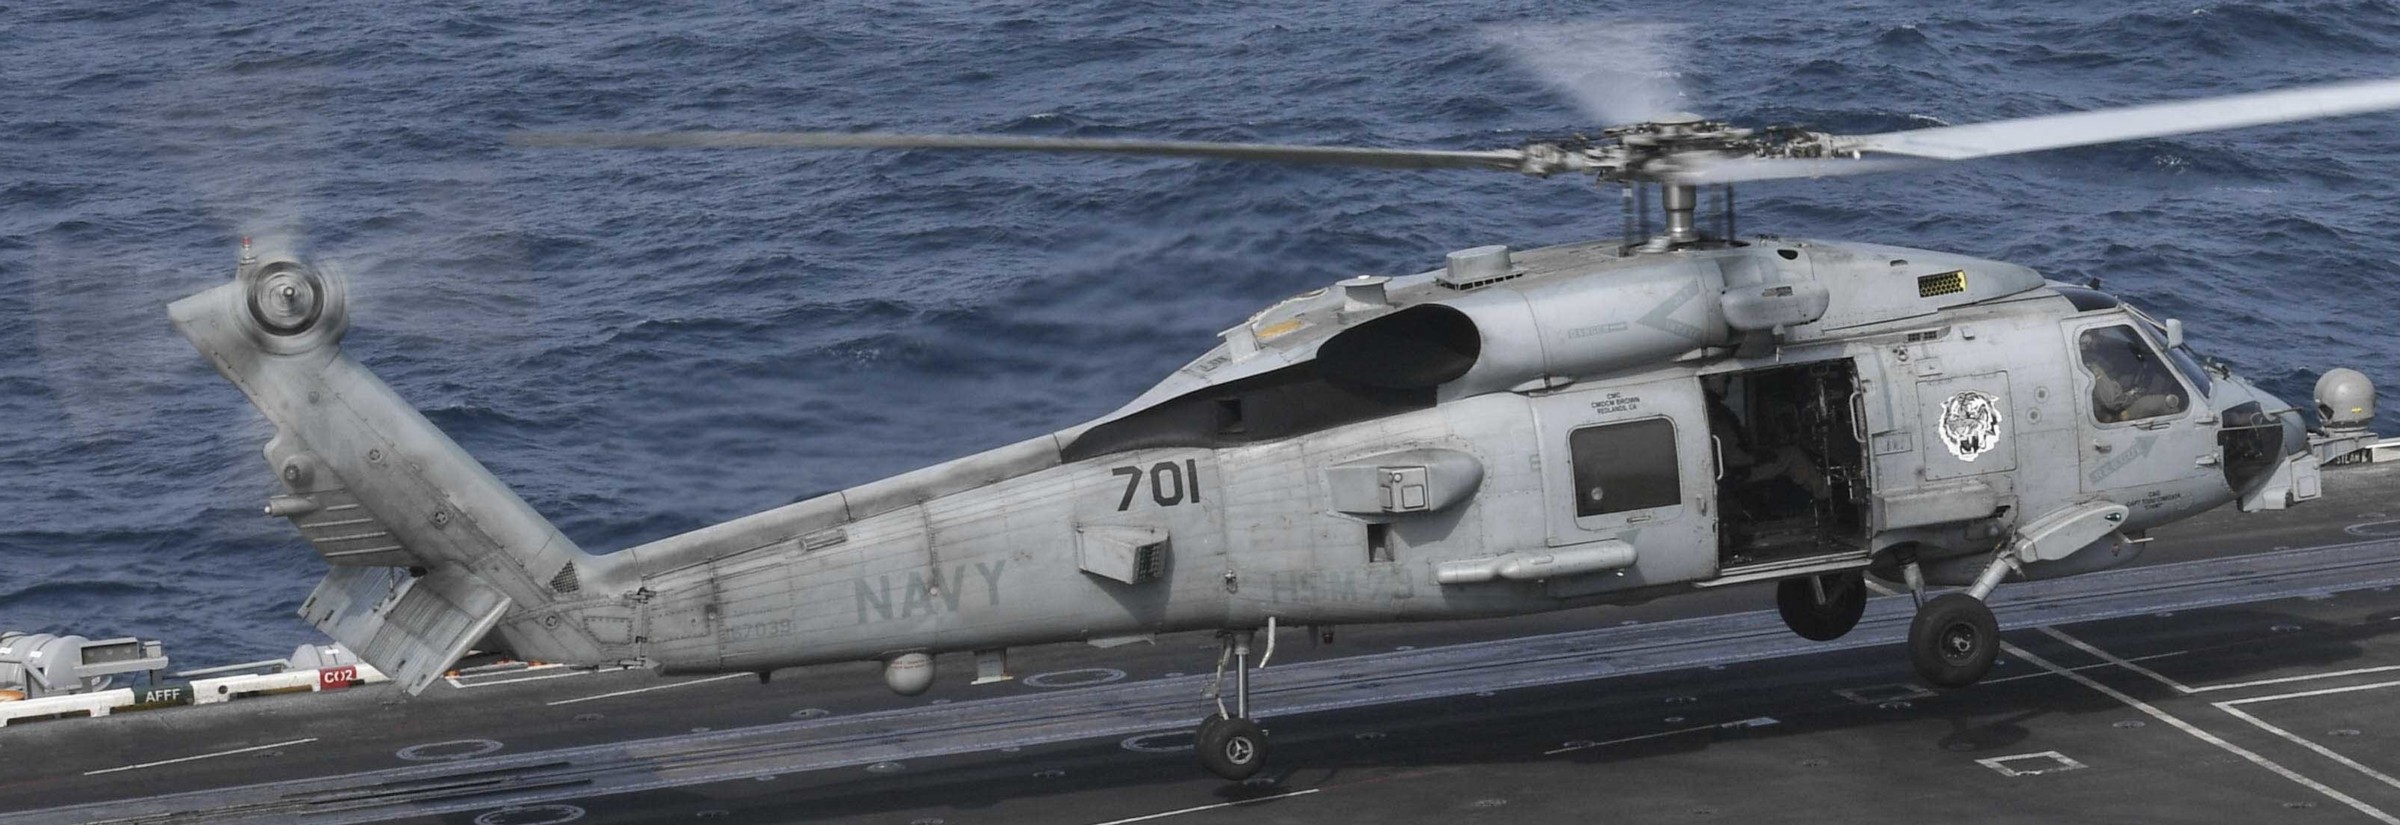 hsm-73 battlecats helicopter maritime strike squadron mh-60r seahawk cvw-17 cvn-68 uss nimitz 29